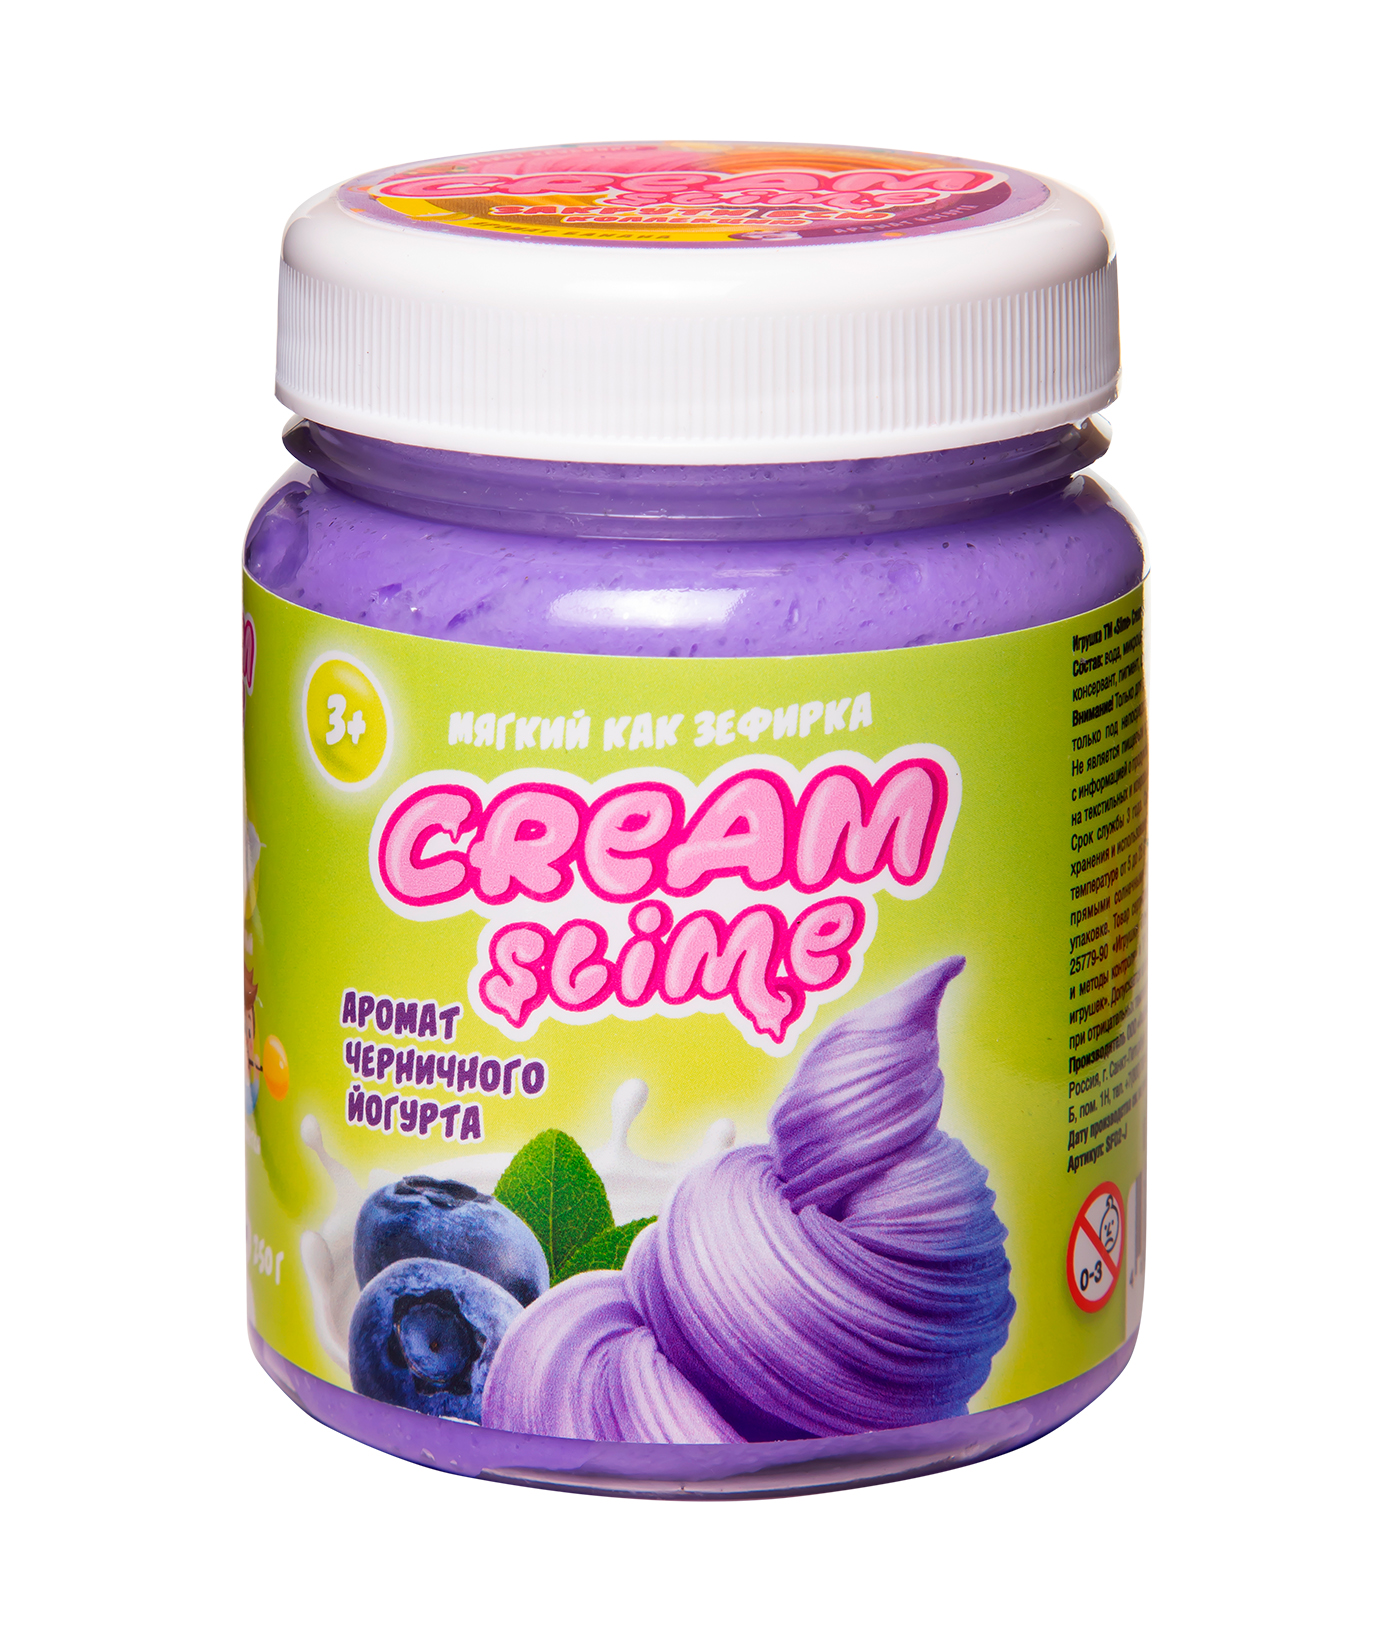 Слайм Cream с ароматом черничного йогурта, 250 г Slime игрушка slime cream slime с ароматом клубники